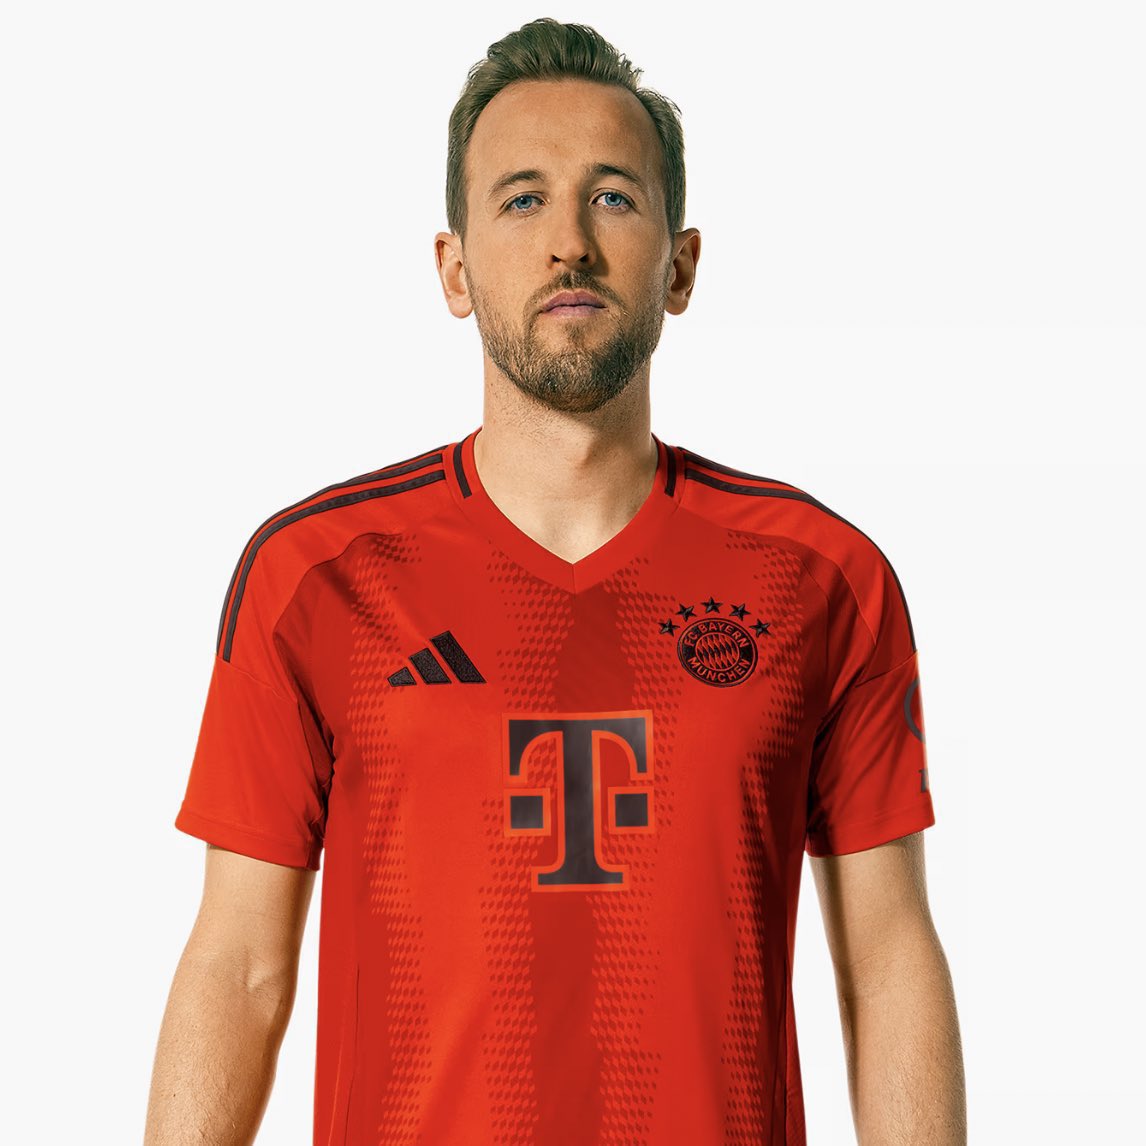 🚨 OFFICIAL: Bayern Munich's new home kit for next season. 🇩🇪

#BayernMunich #ChampionsLeague #Endrick #DarwinNunez #P2E